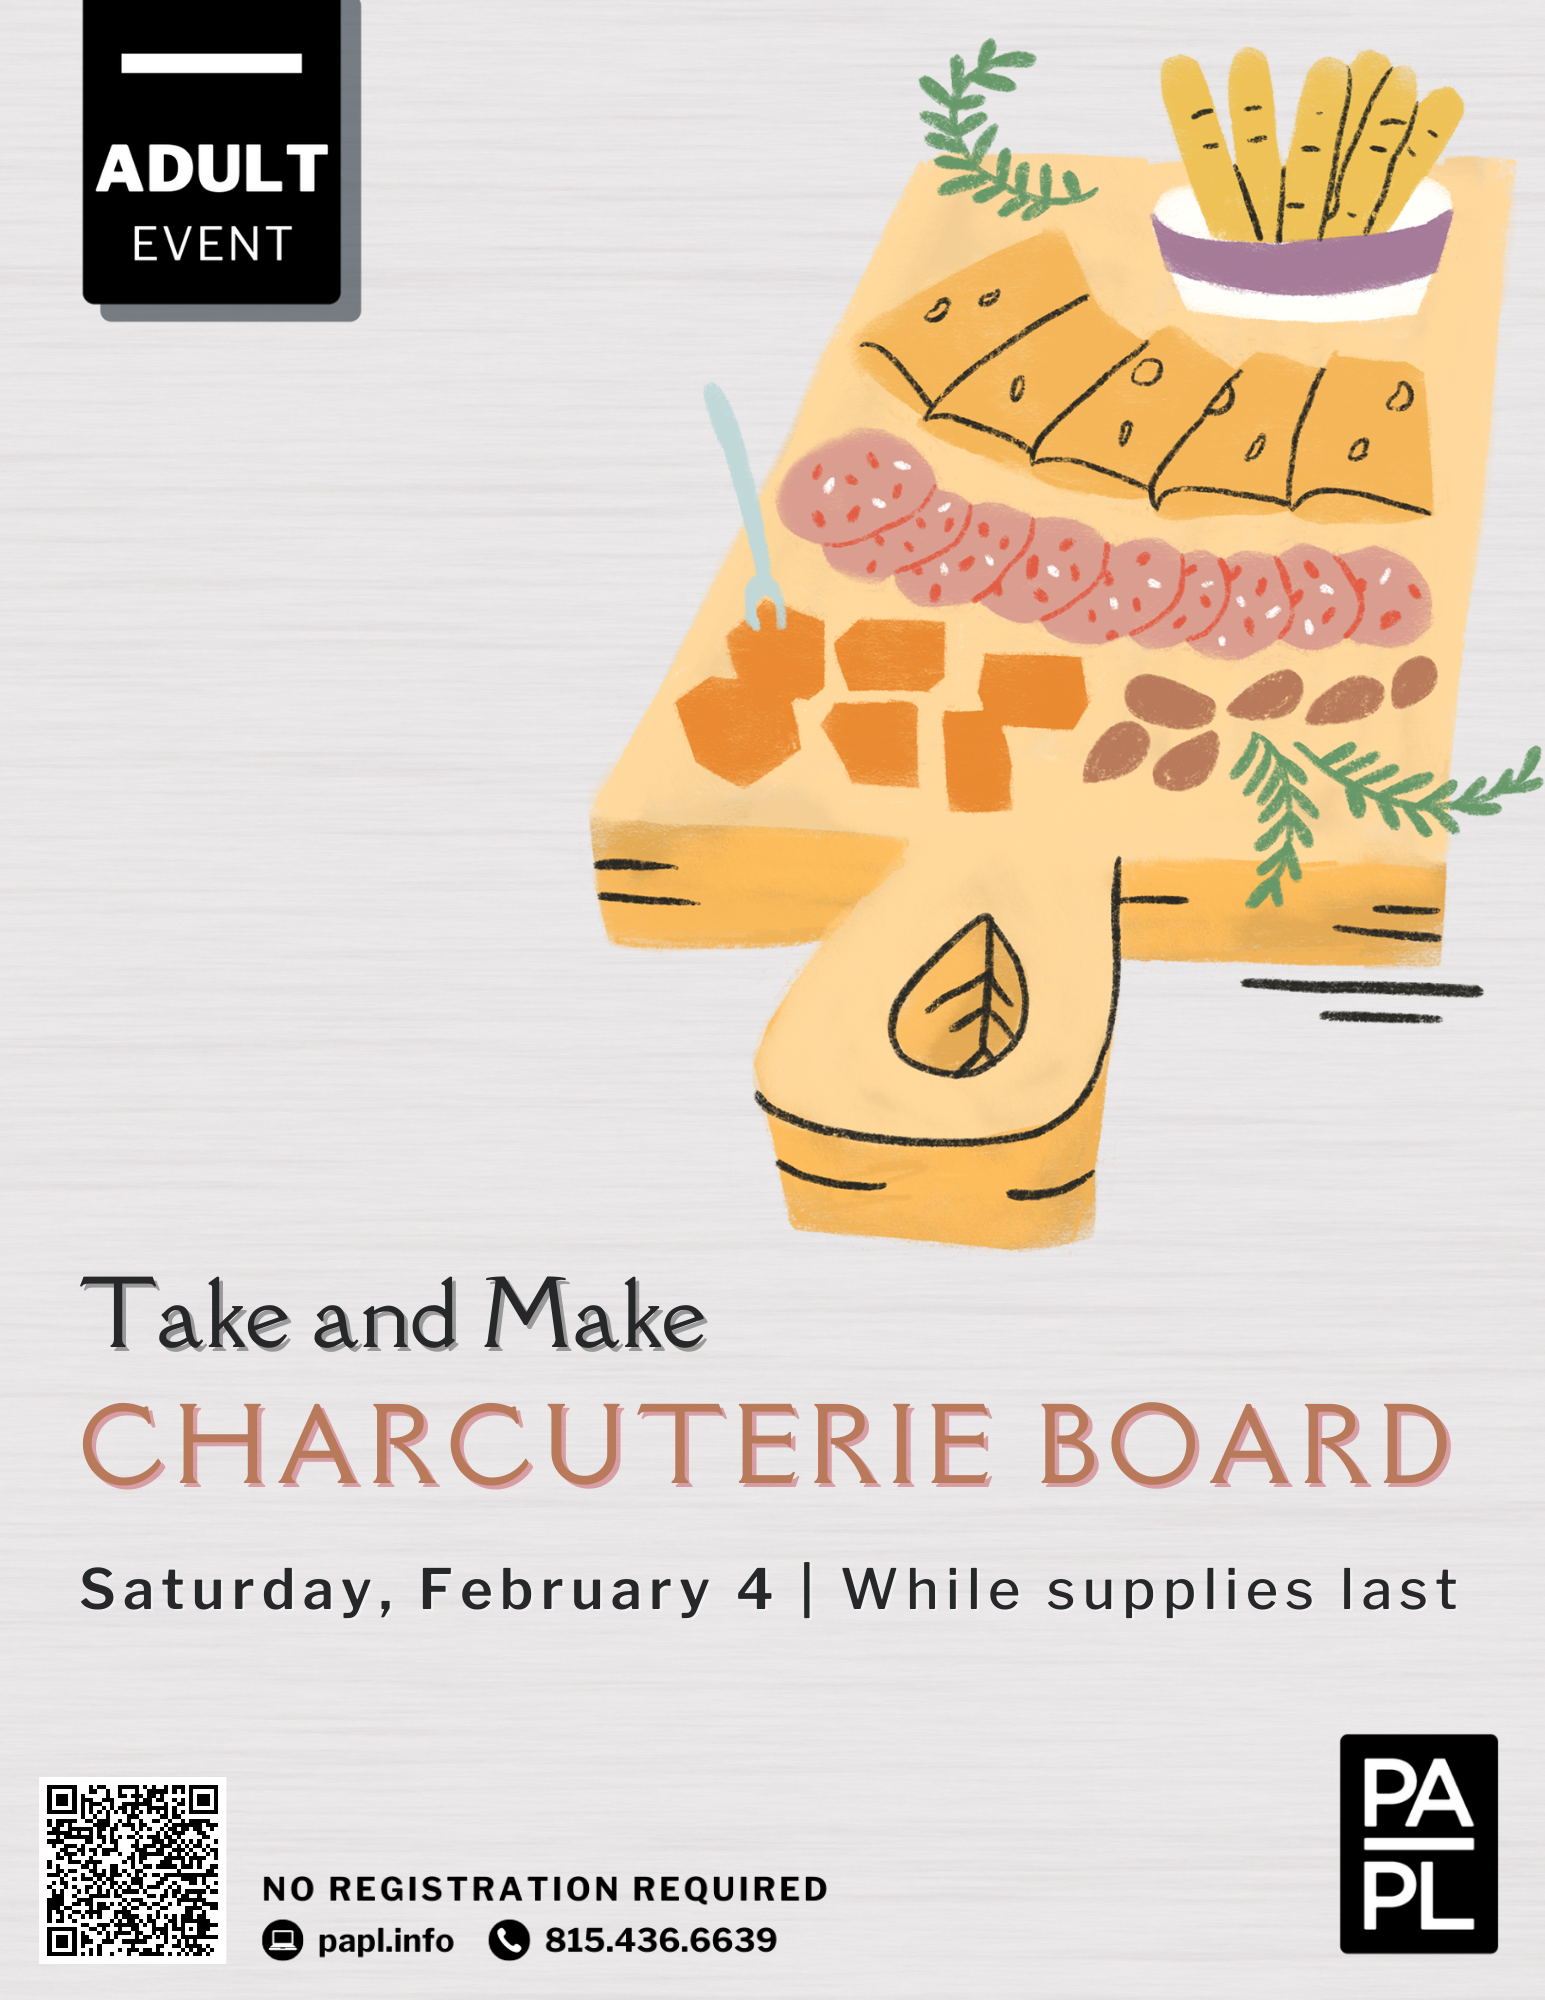 TAKE AND MAKE Charcuterie Board